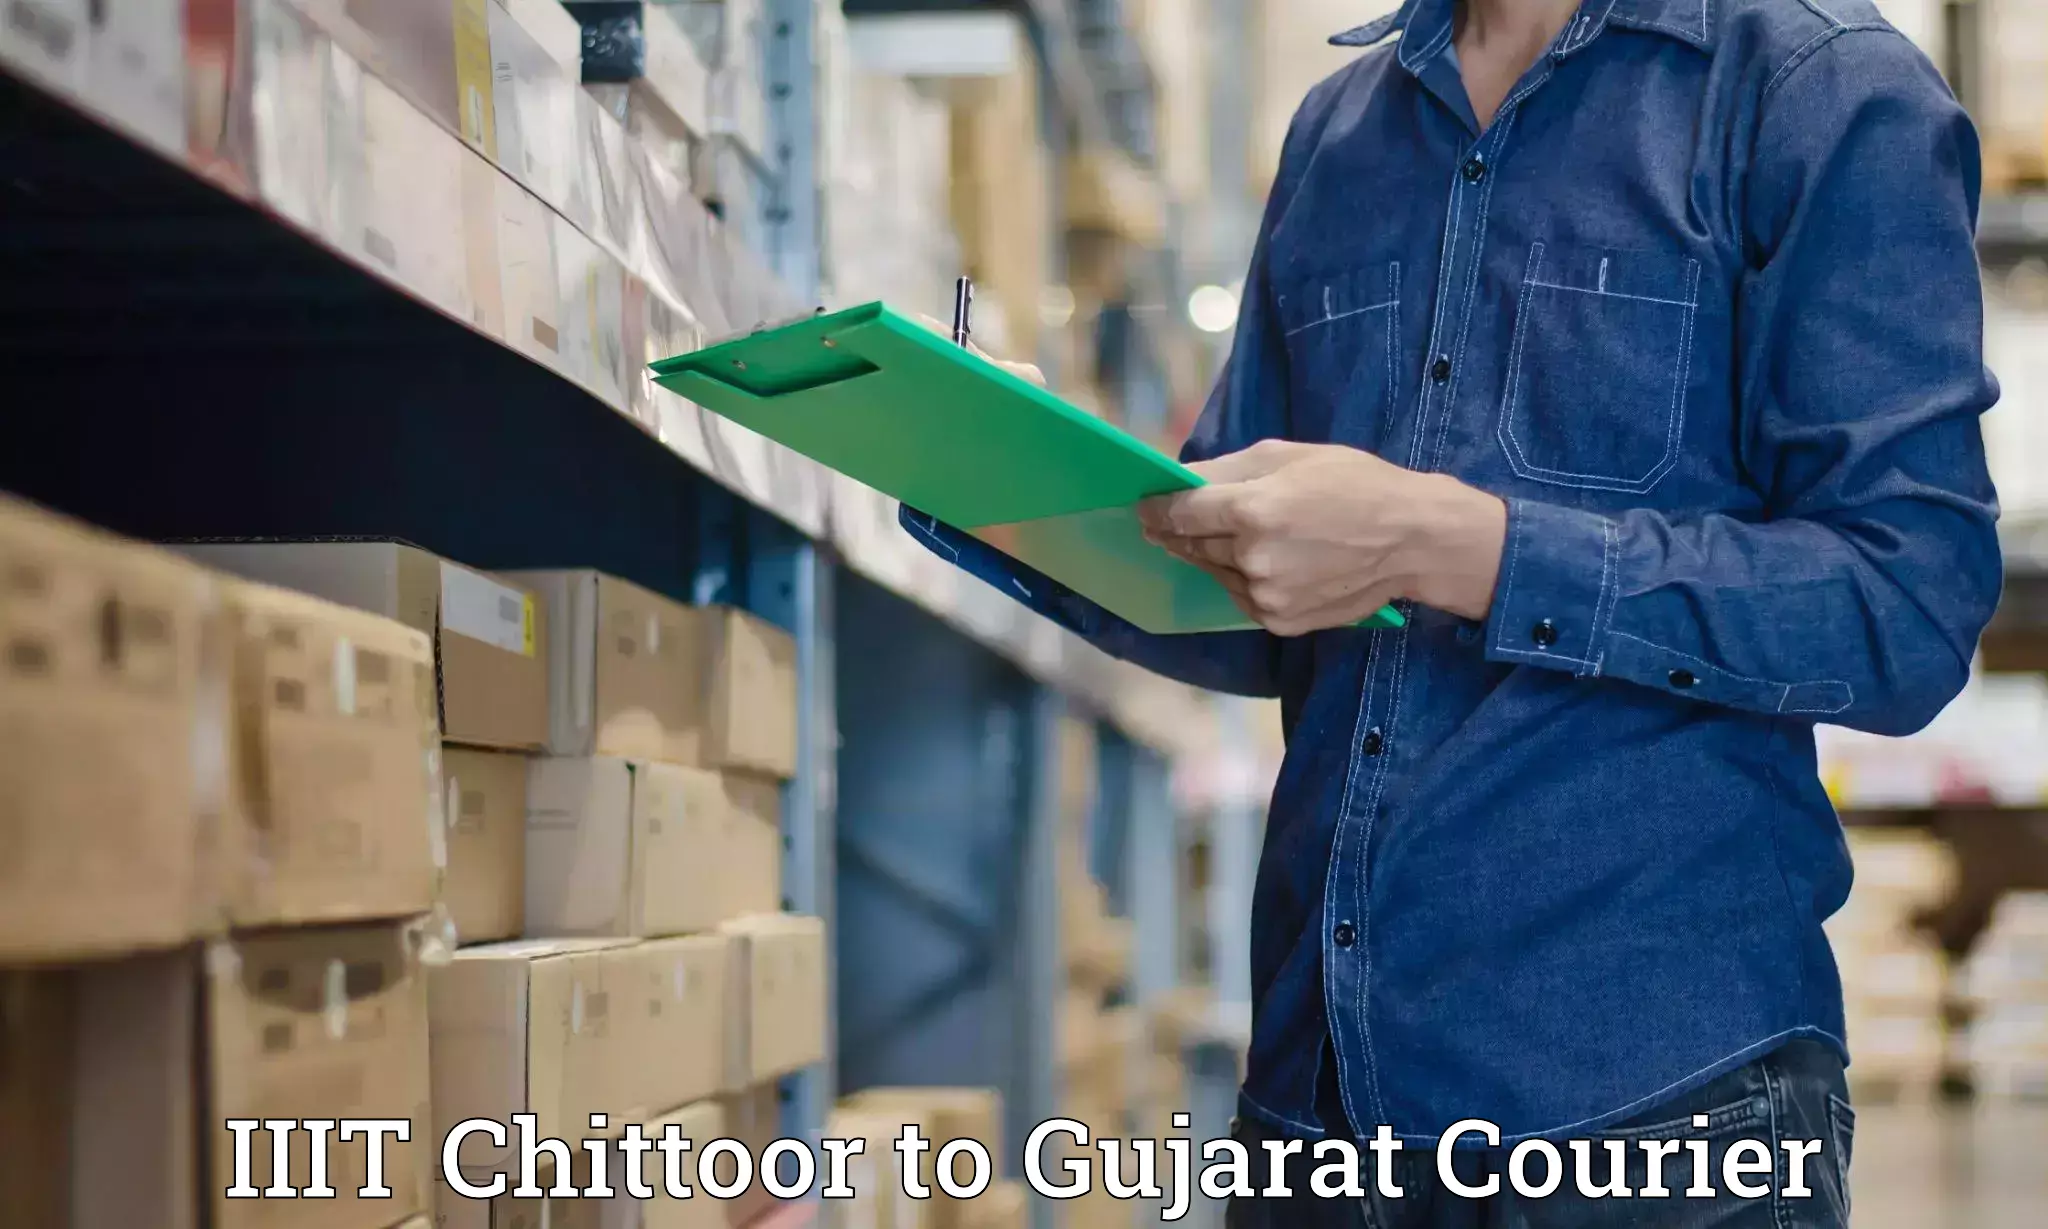 Speedy delivery service IIIT Chittoor to Manavadar